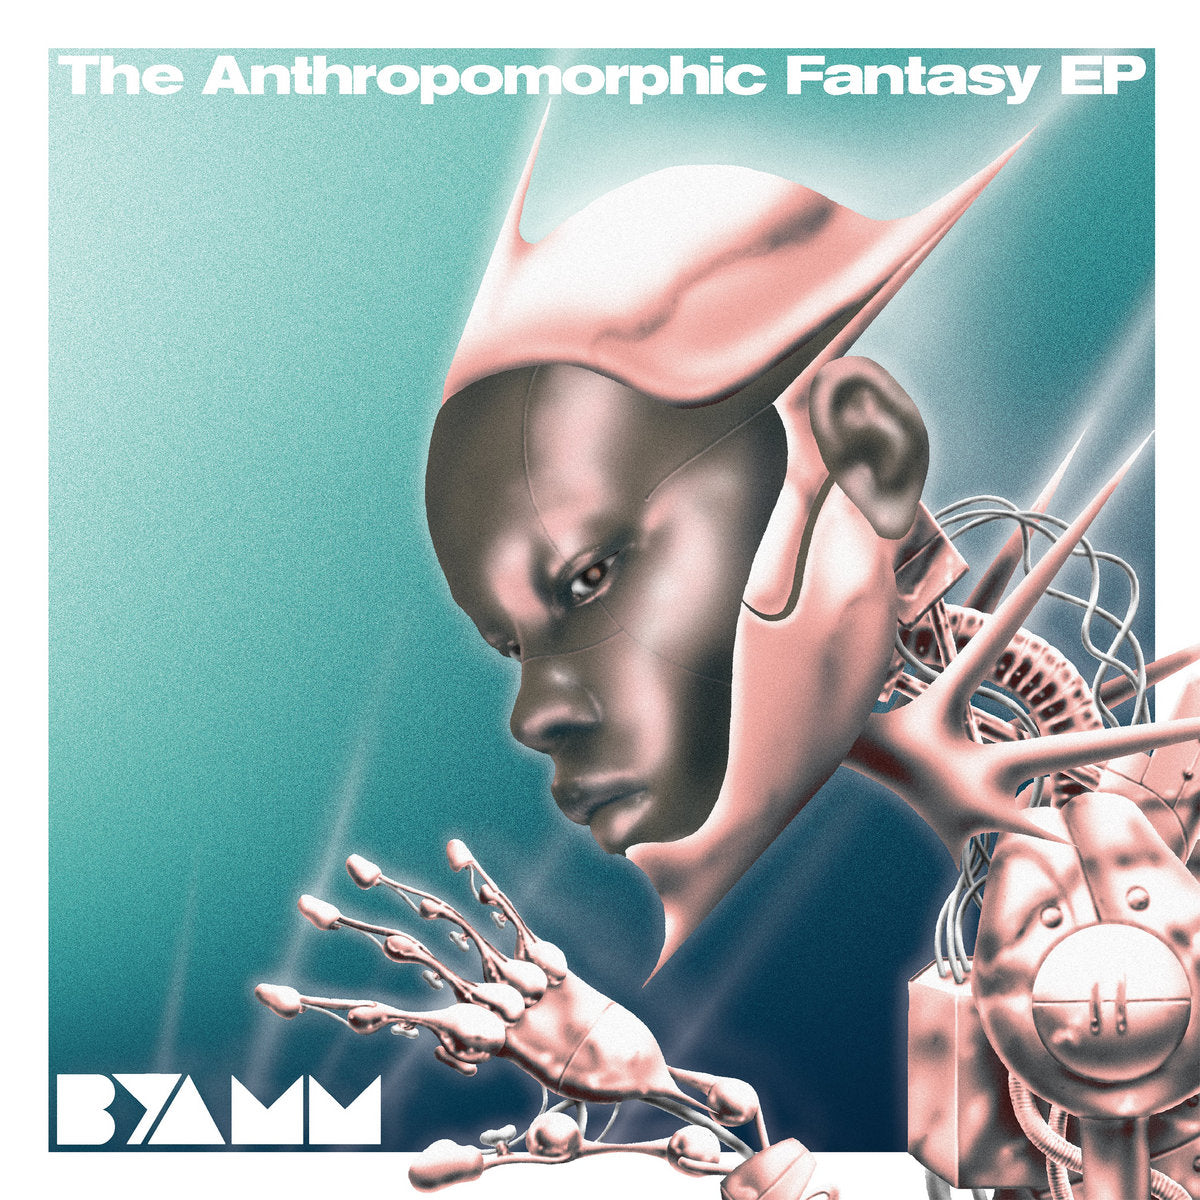 BYAMM - The Anthropomorphic Fantasy EP